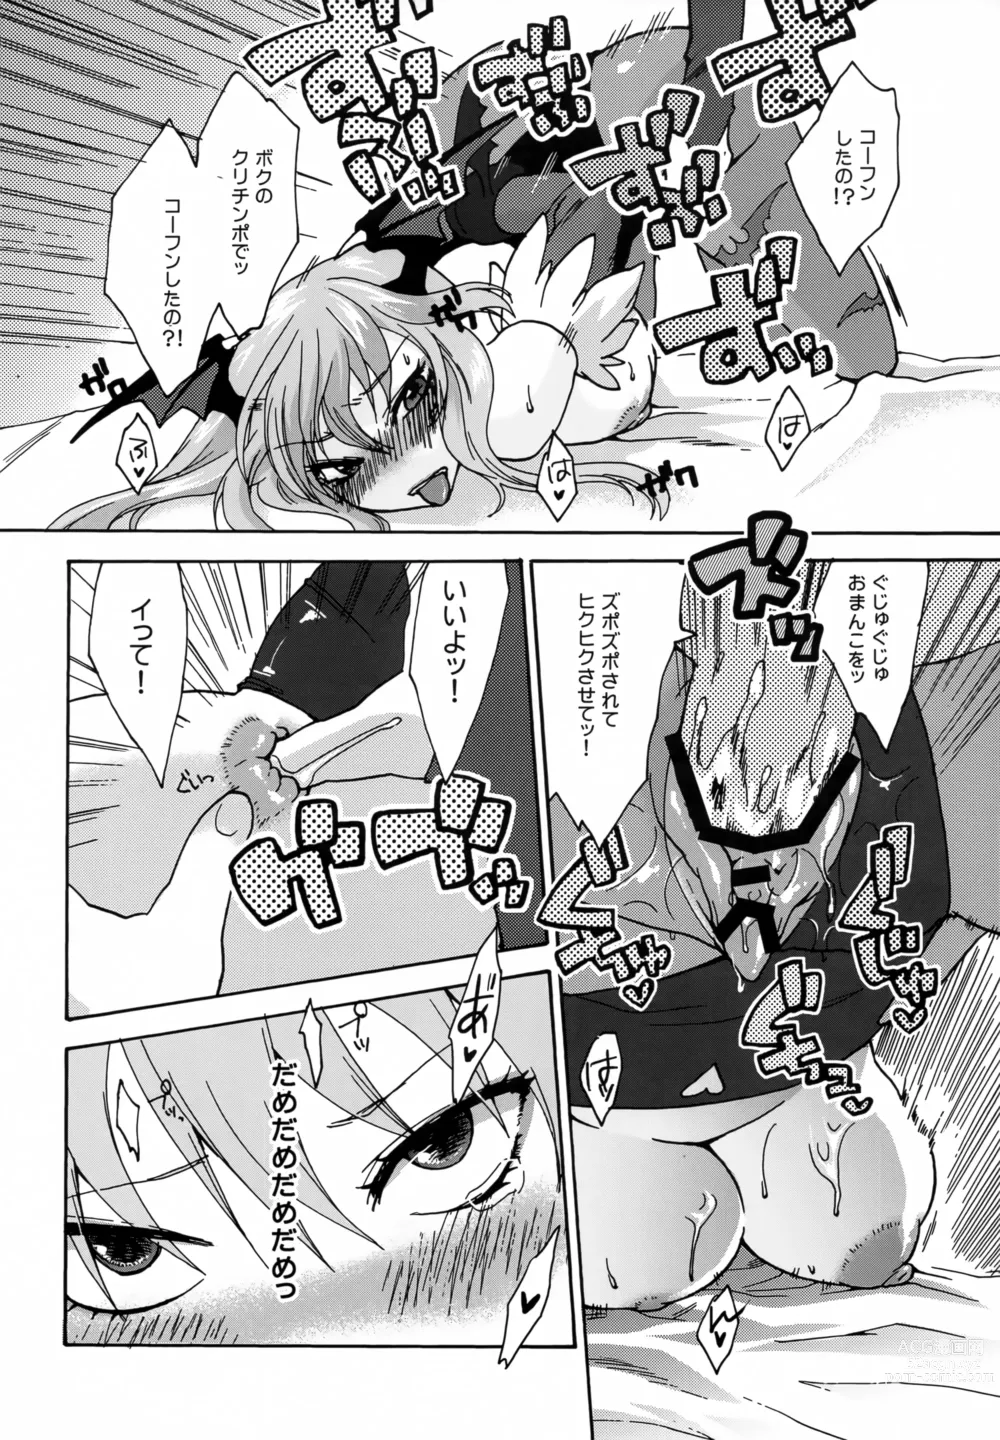 Page 27 of doujinshi regains